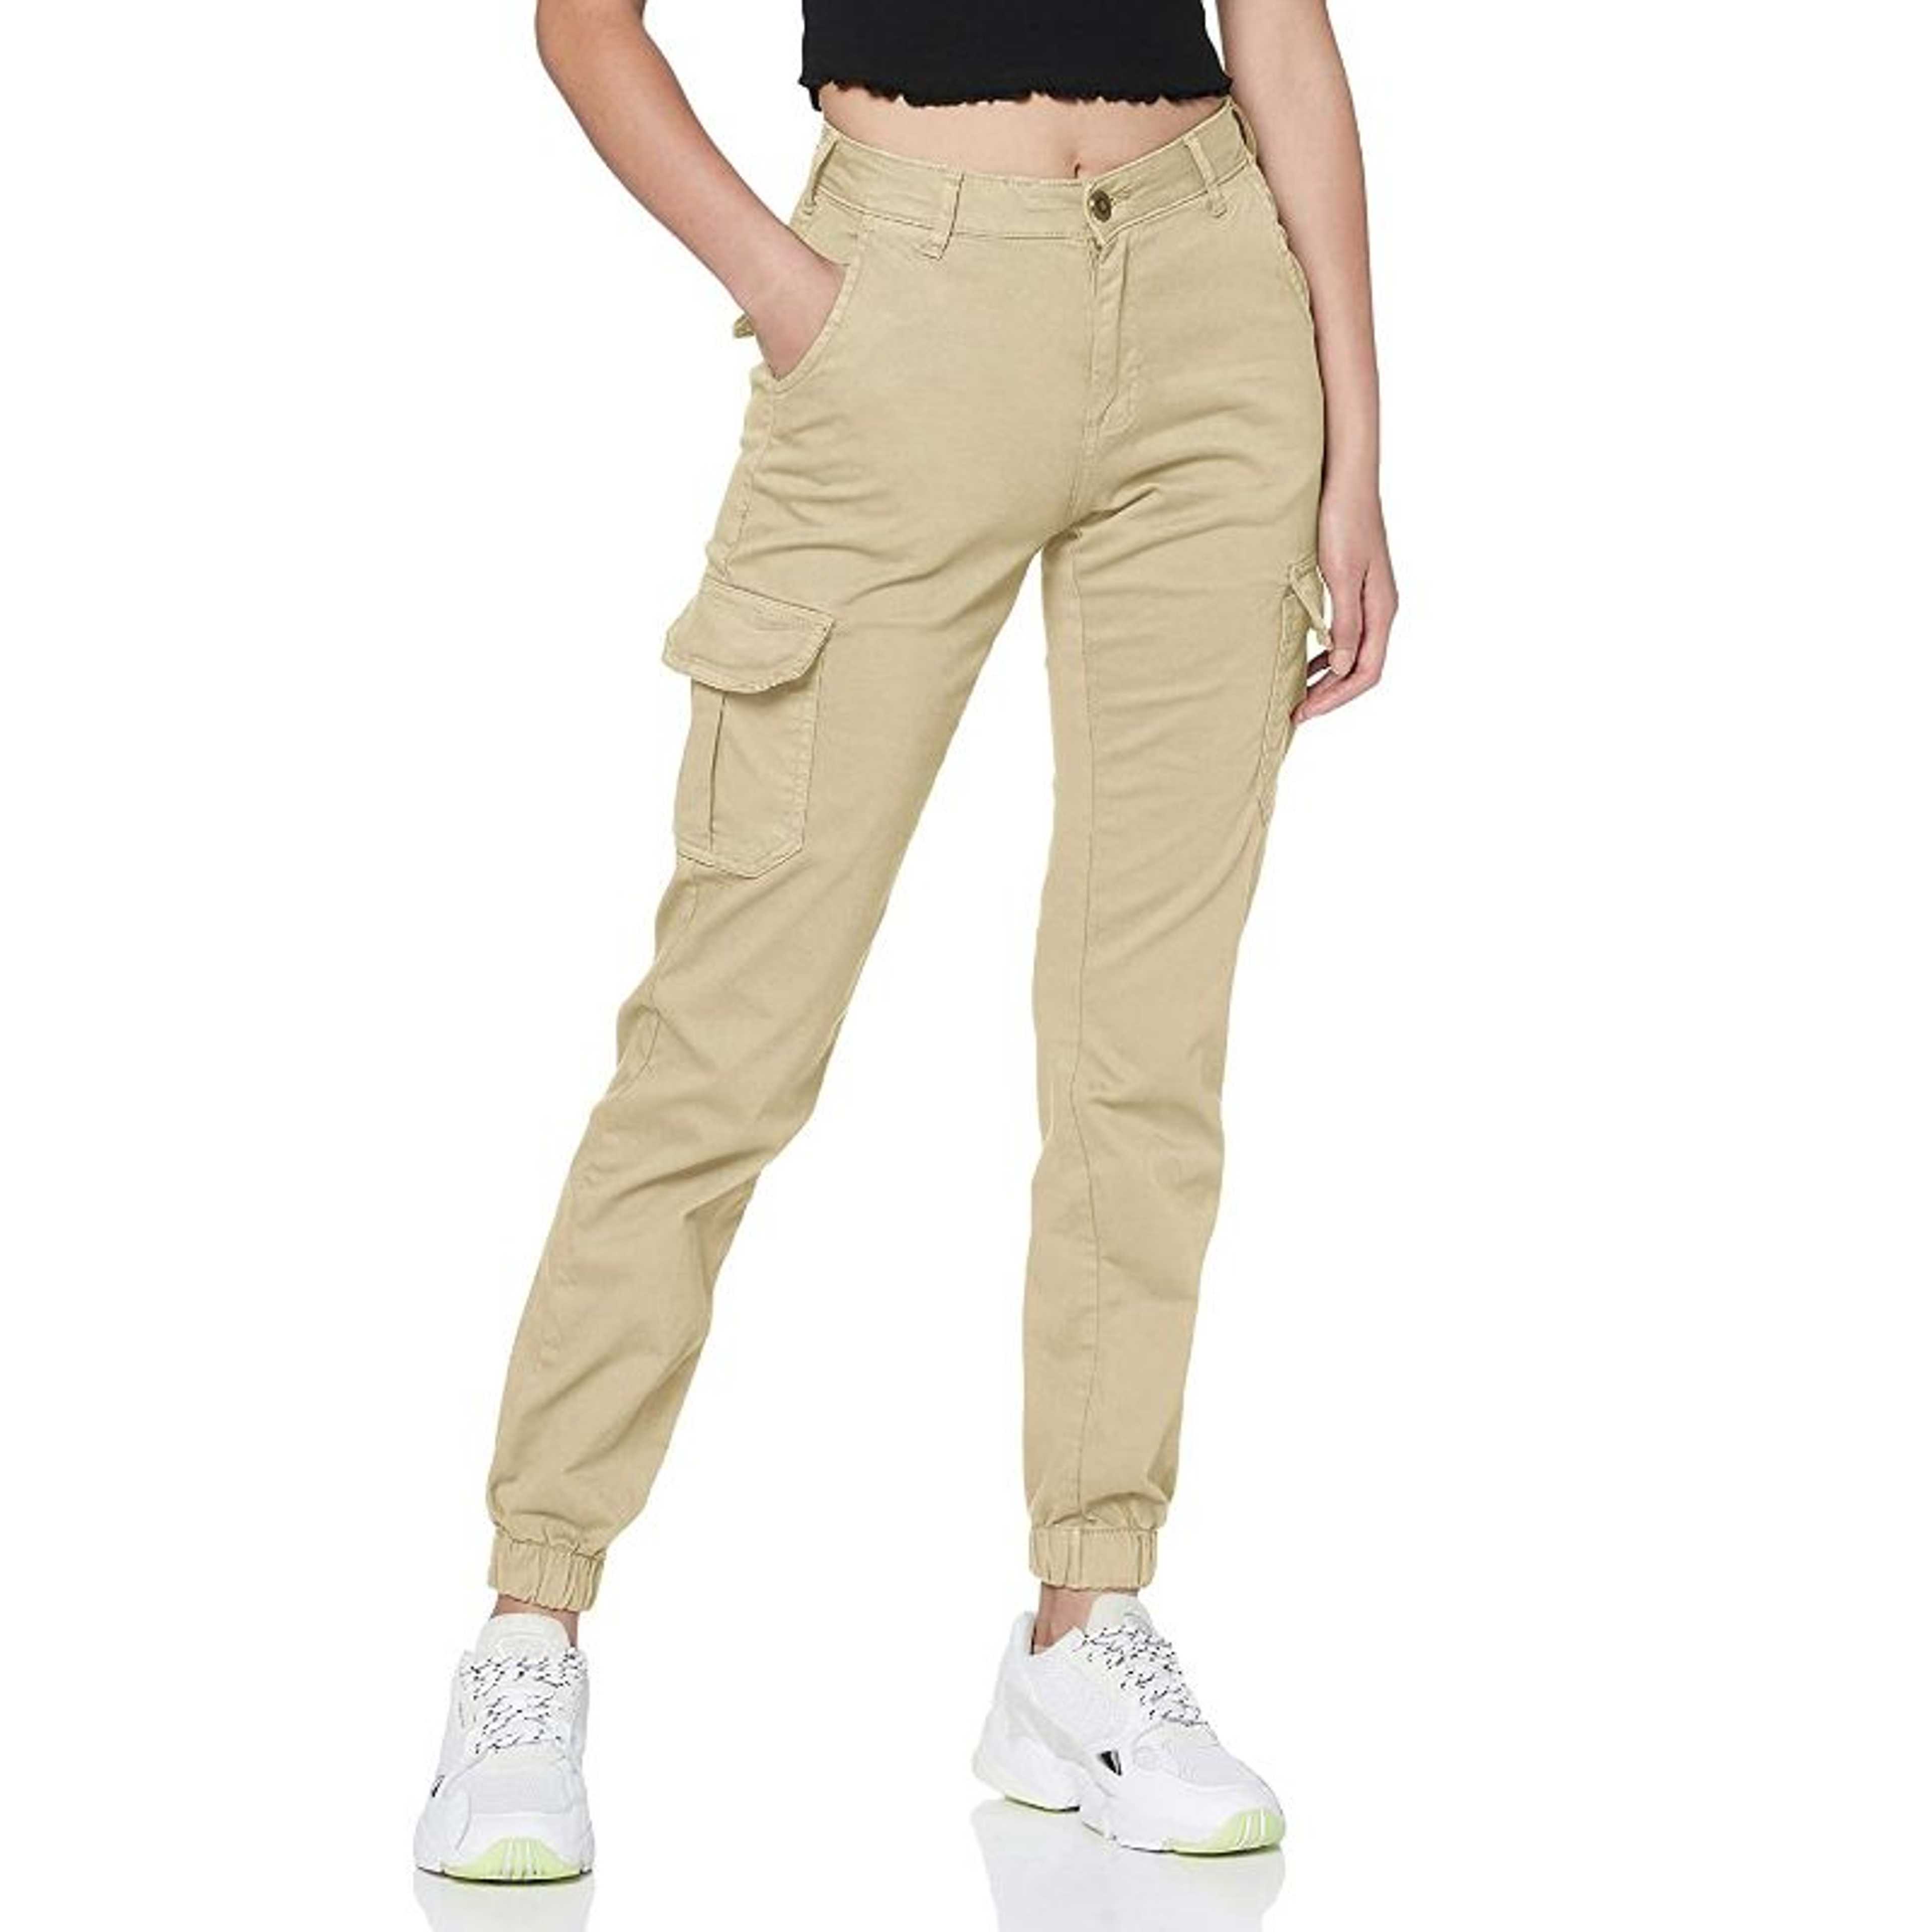 Khaki Color Rubahas Womens Cargo Trousers Ladies Trousers Jeans Pants